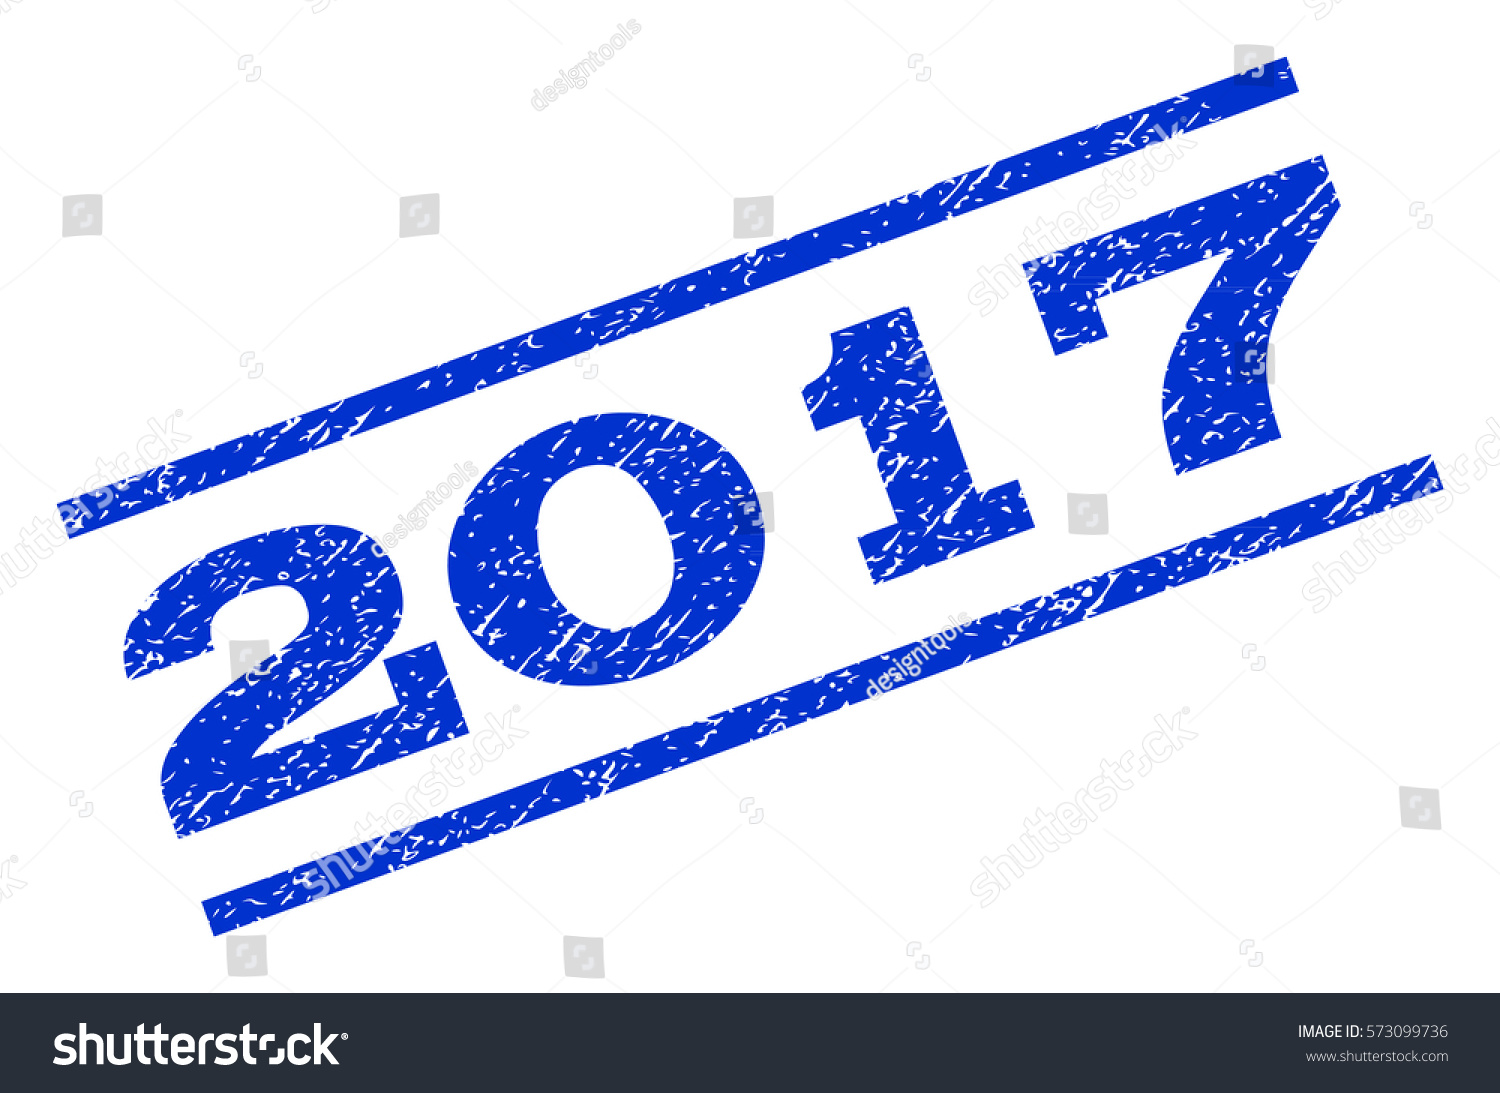 2017 Watermark Stamp Text Caption Between Stock Vector Royalty Free 573099736 Shutterstock 9123